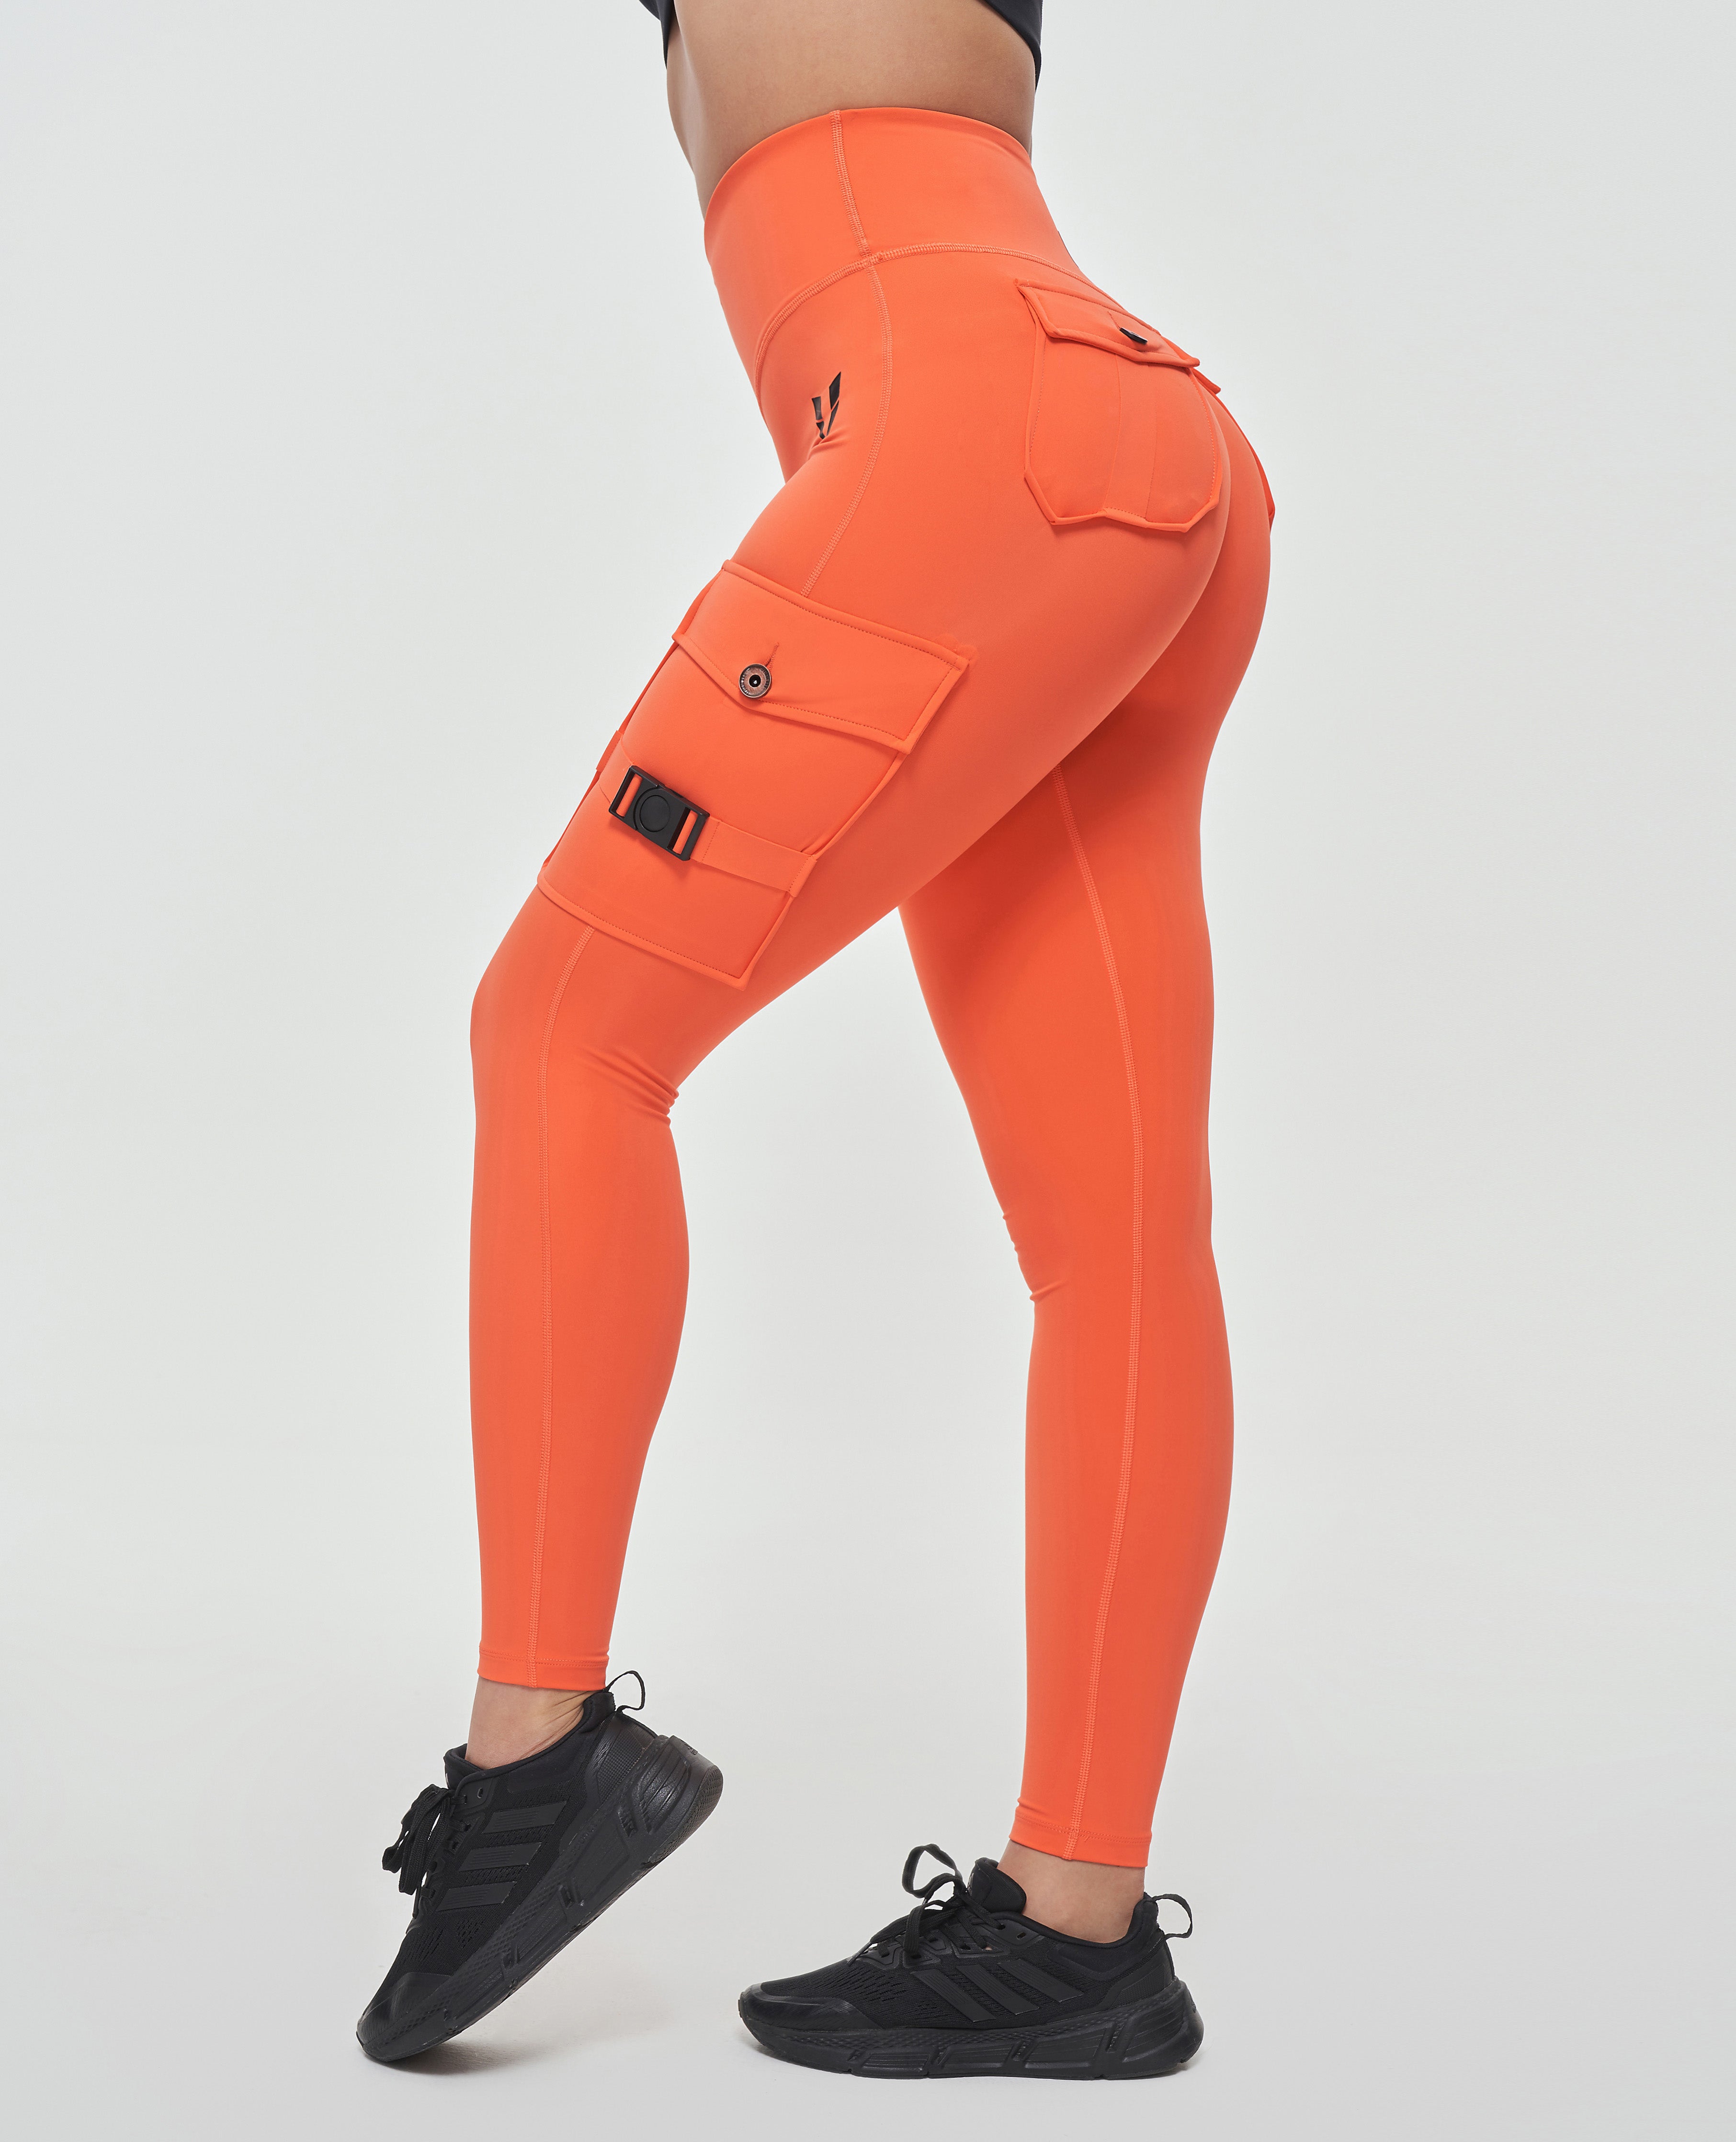 Sexy Skin Tight Yoga Pants Sportswear for Ladies - China Legging